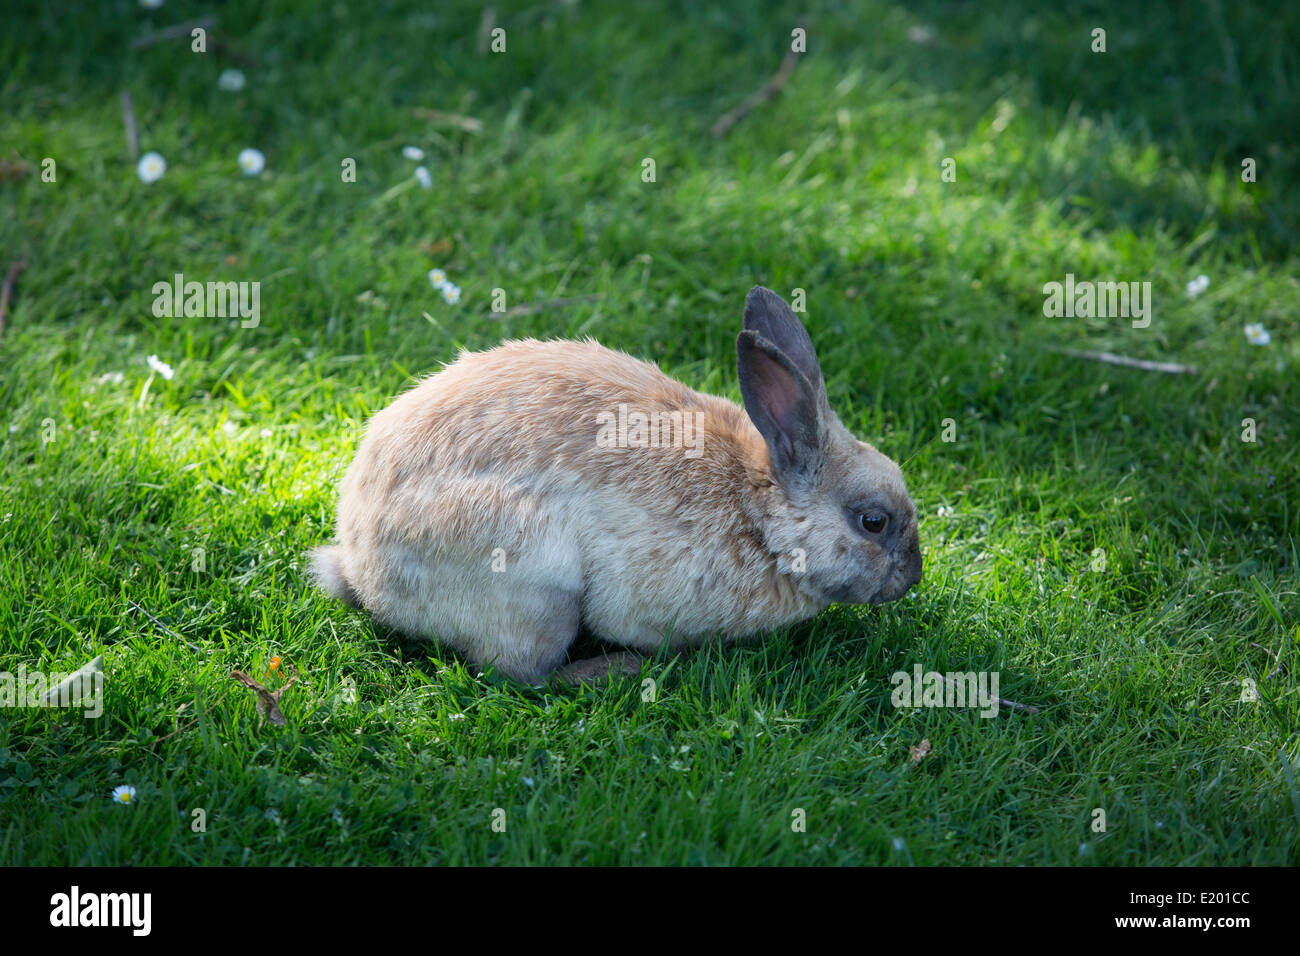 Wild rabbit in a grassy field. Stock Photo